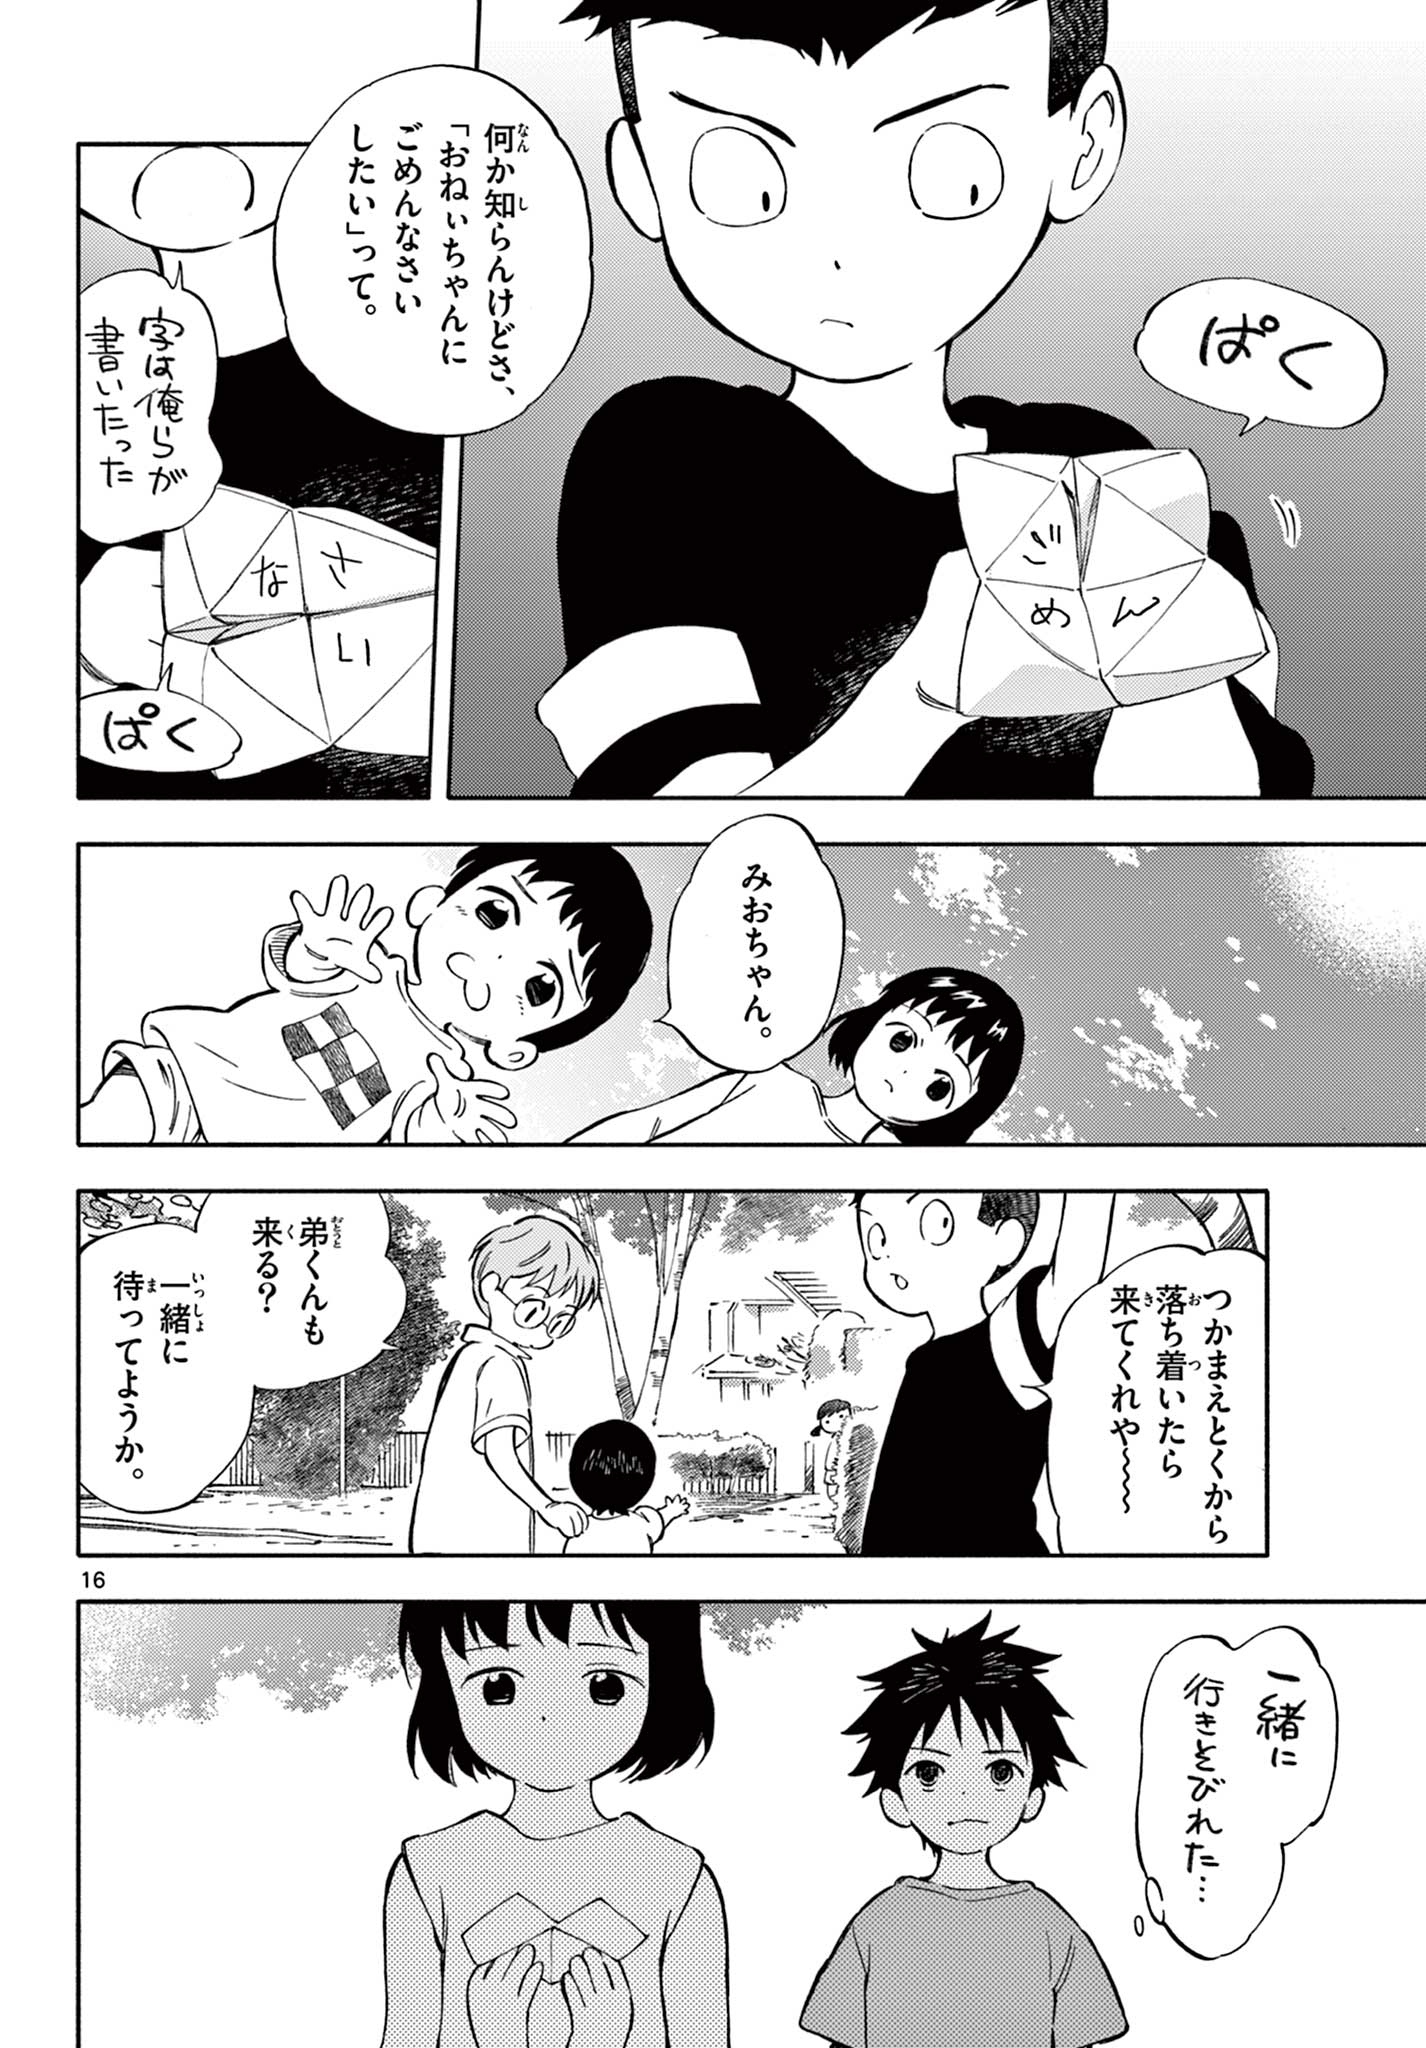 Nami no Shijima no Horizont - Chapter 11.2 - Page 2